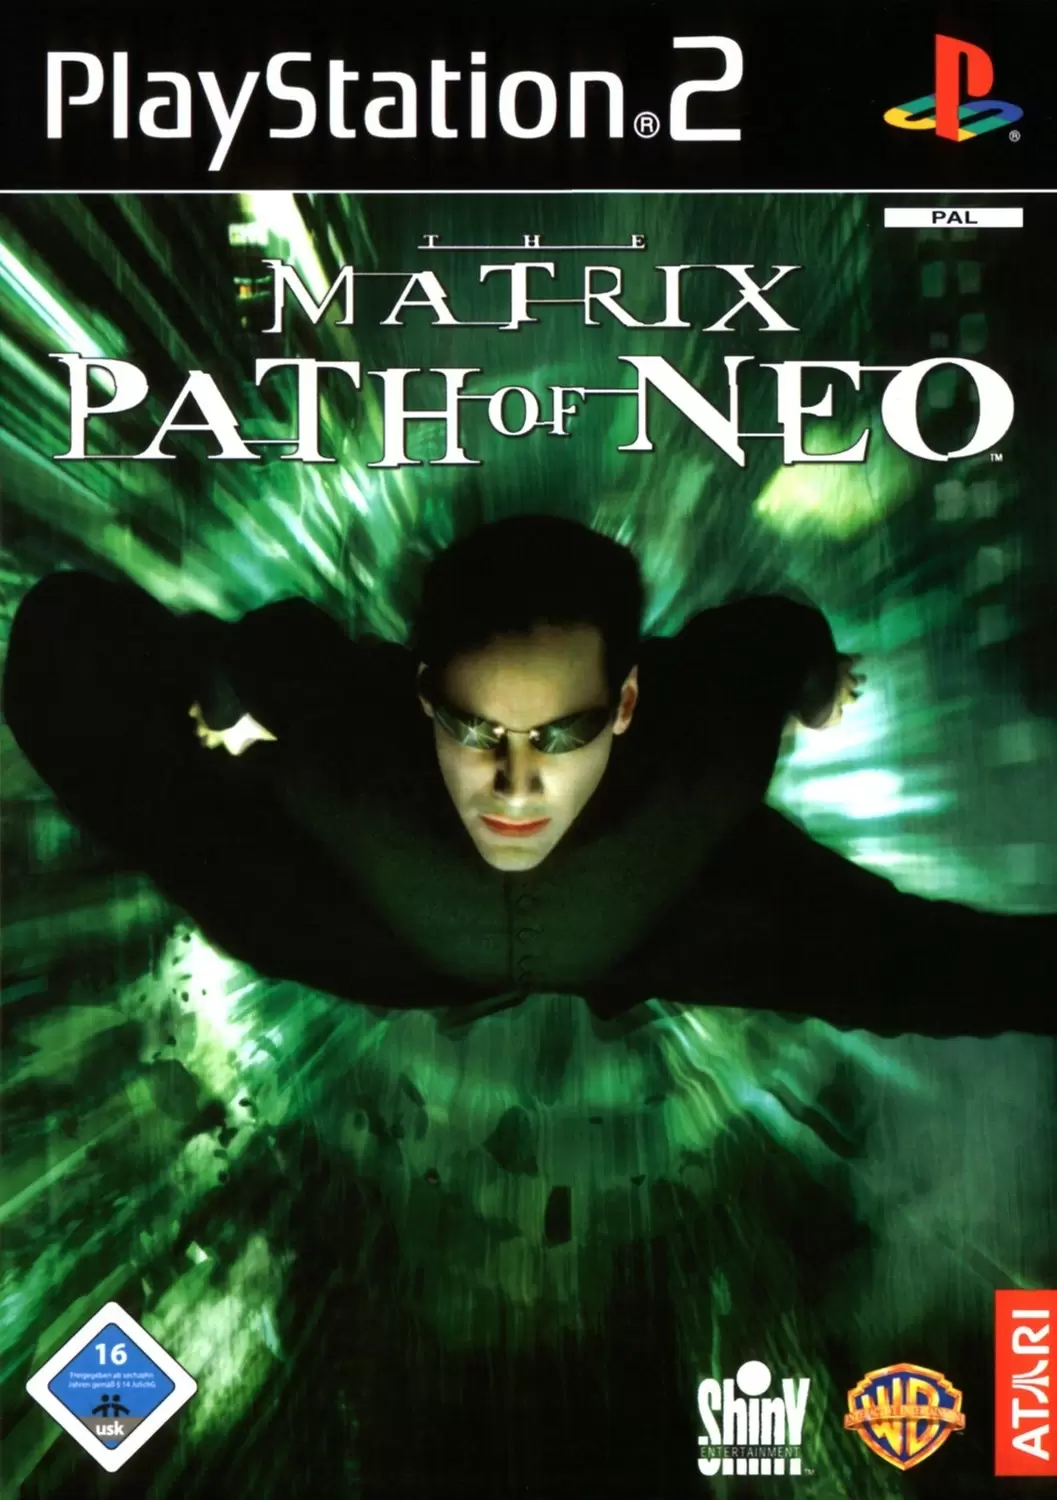 Jeux PS2 - The Matrix: Path of Neo